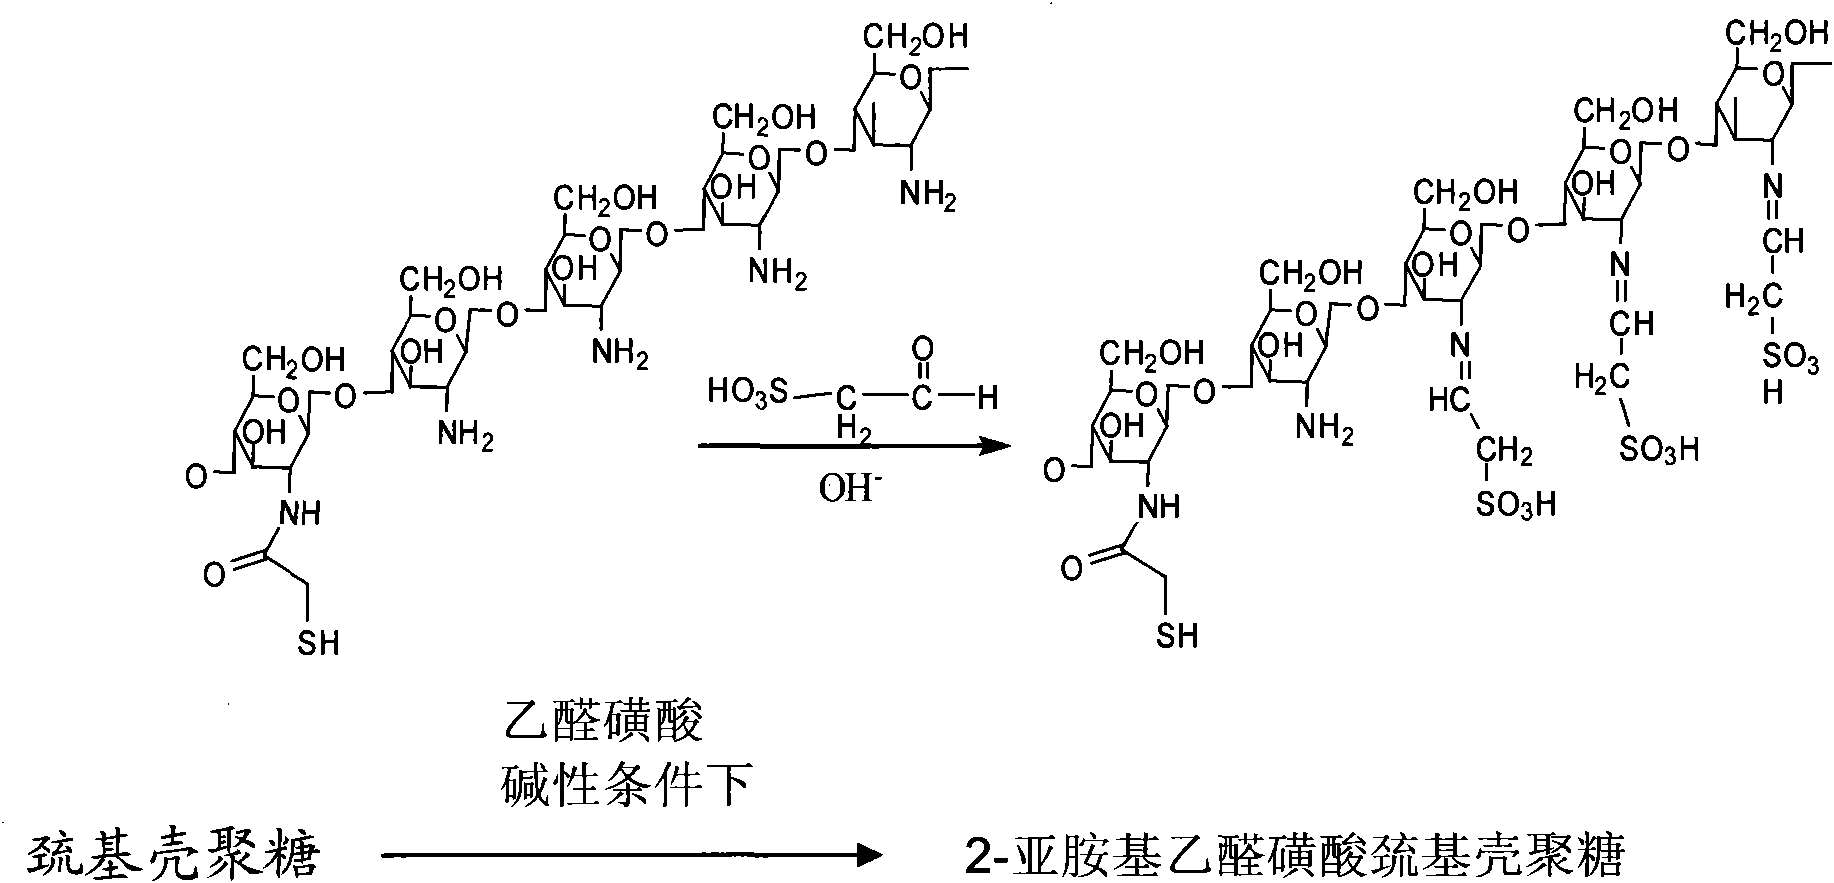 Sulfonation modification process of thio chitosan